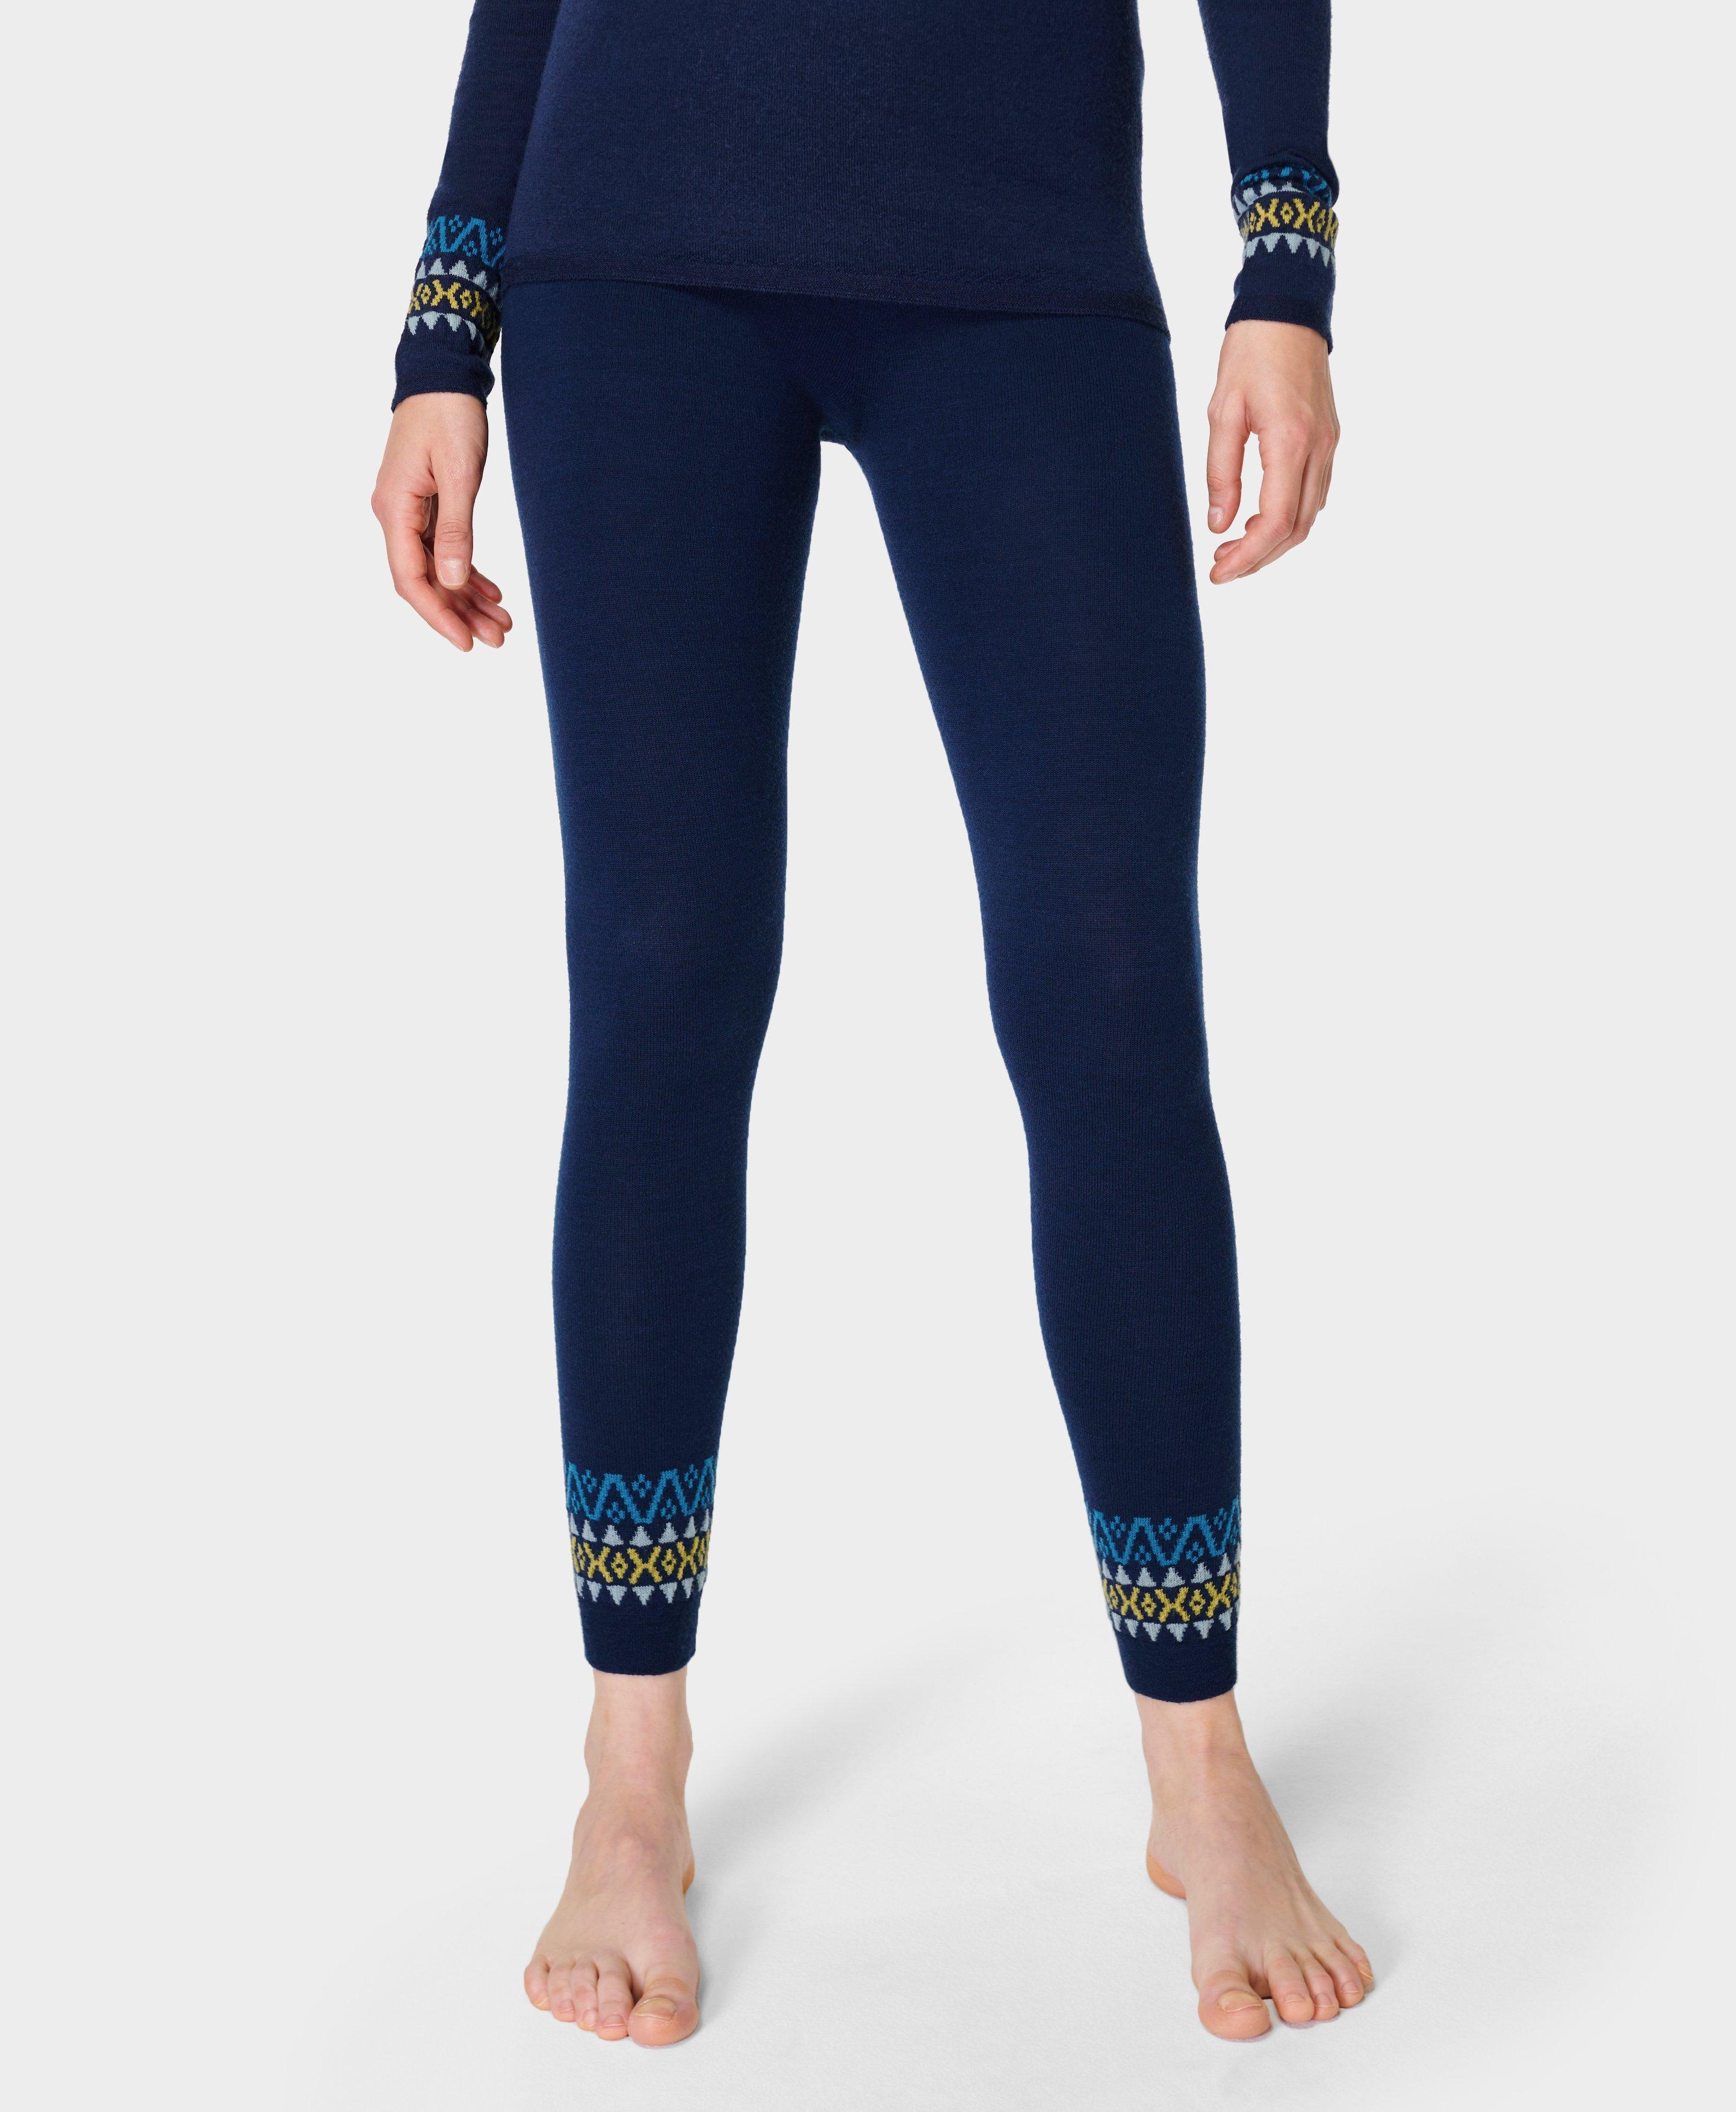 Merino Fairisle Base Layer Legging - Navy Blue, Women's Ski Clothes